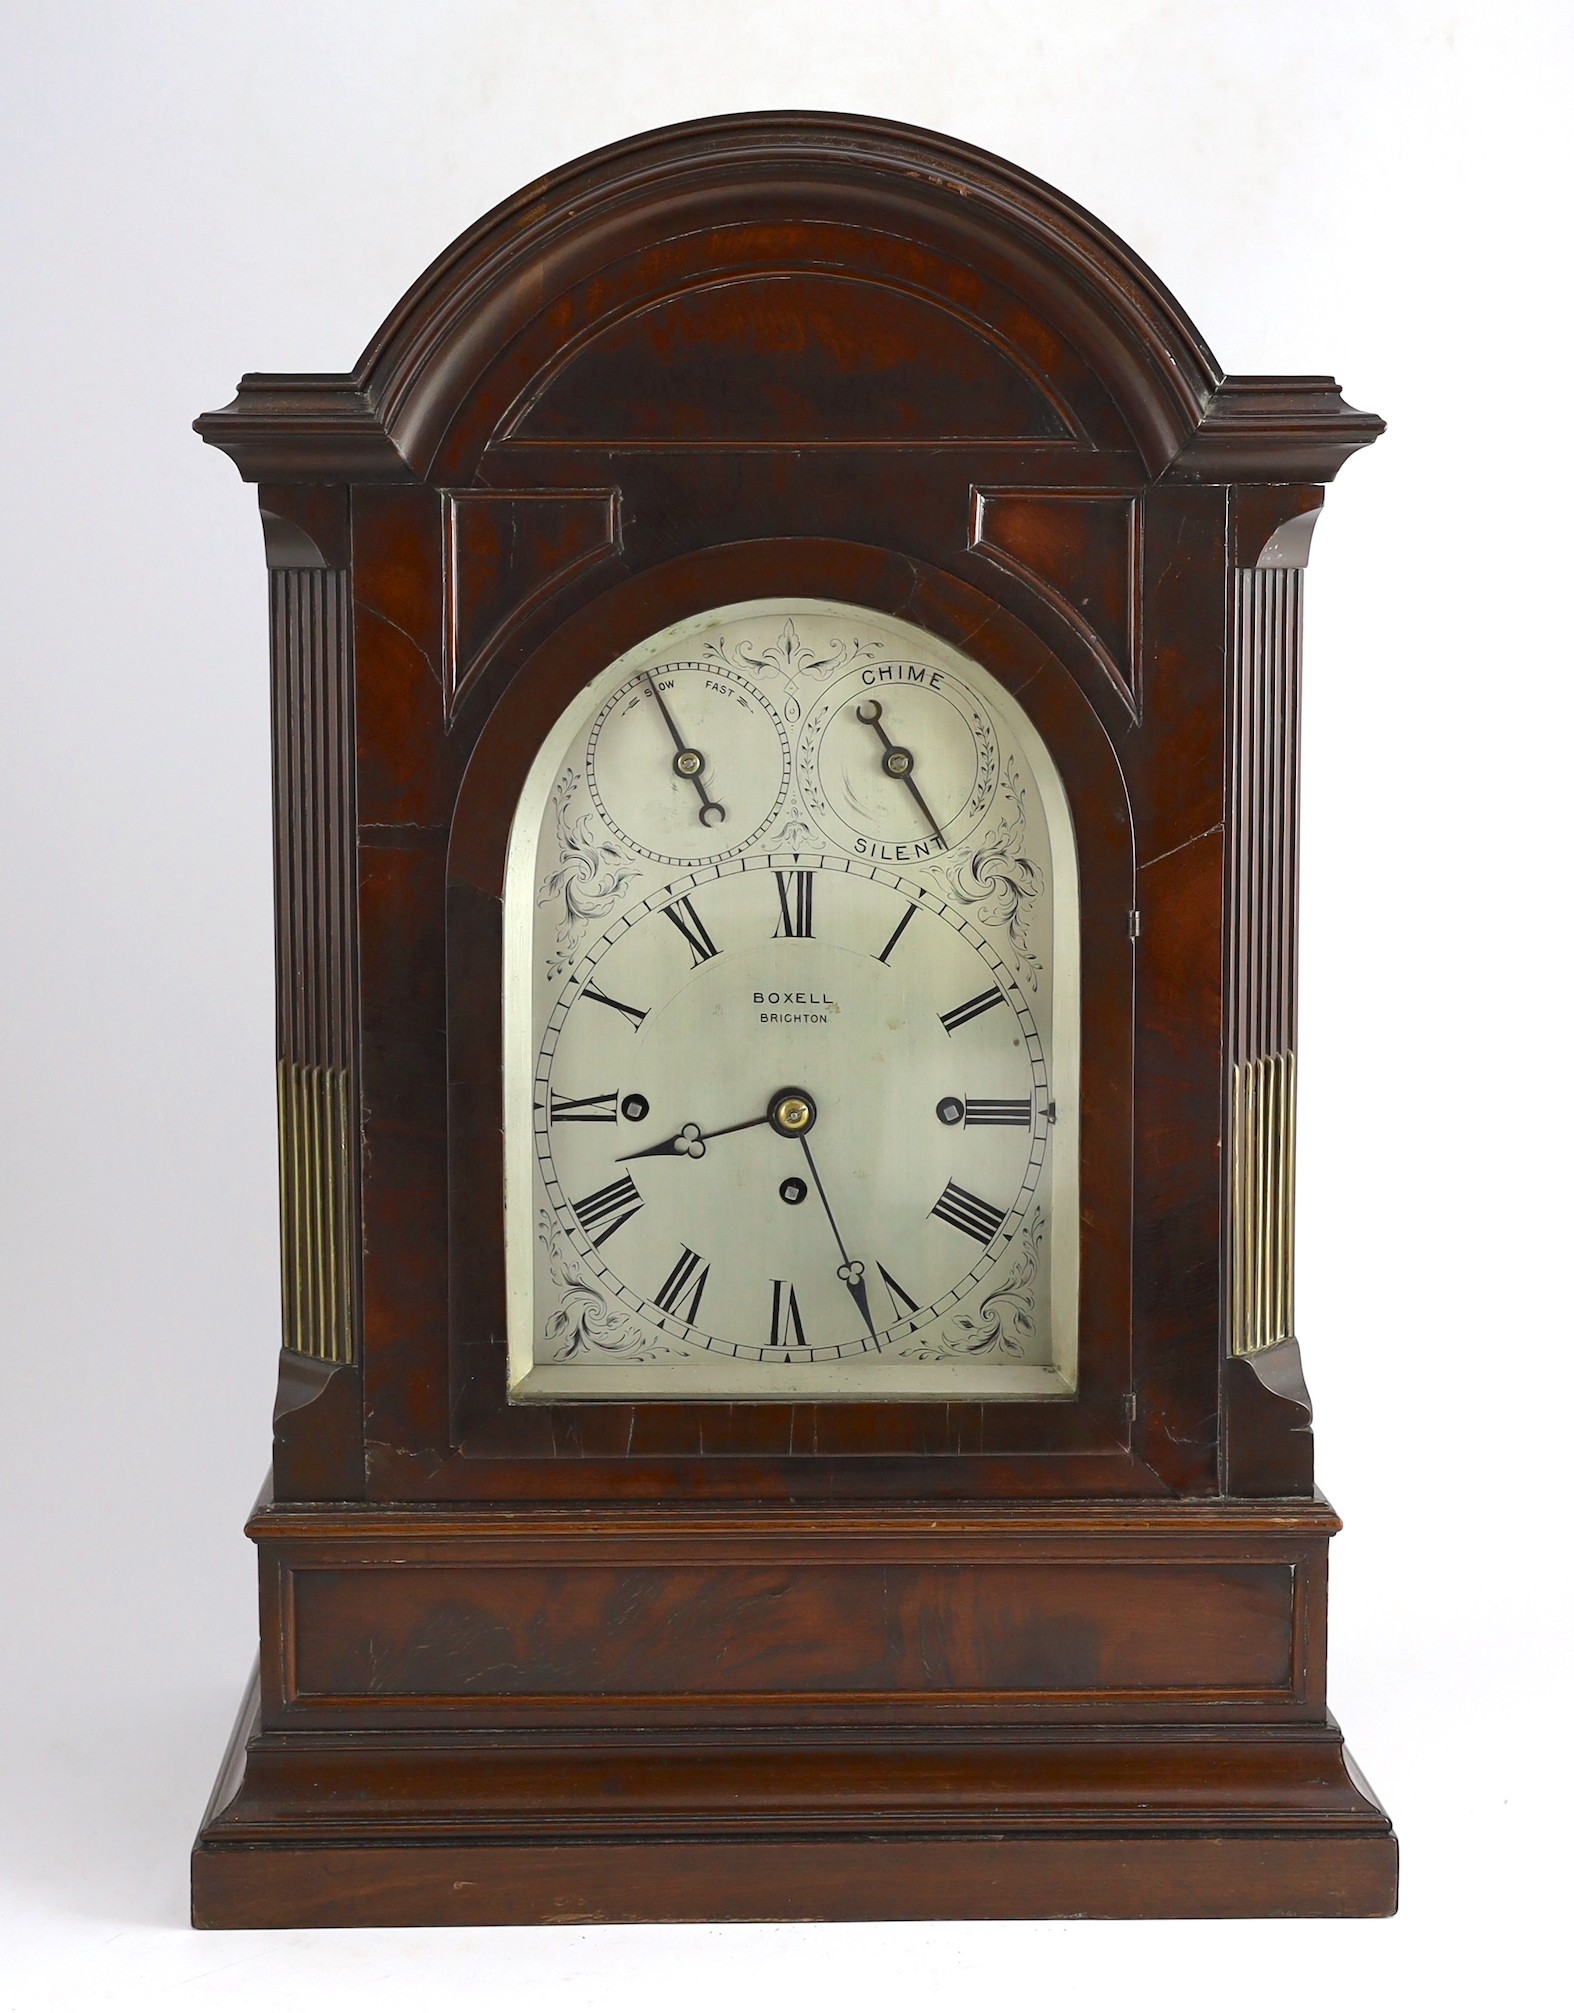 Boxell, Brighton, a Victorian mahogany chiming bracket clock, width 43cm depth 26cm height 64cm